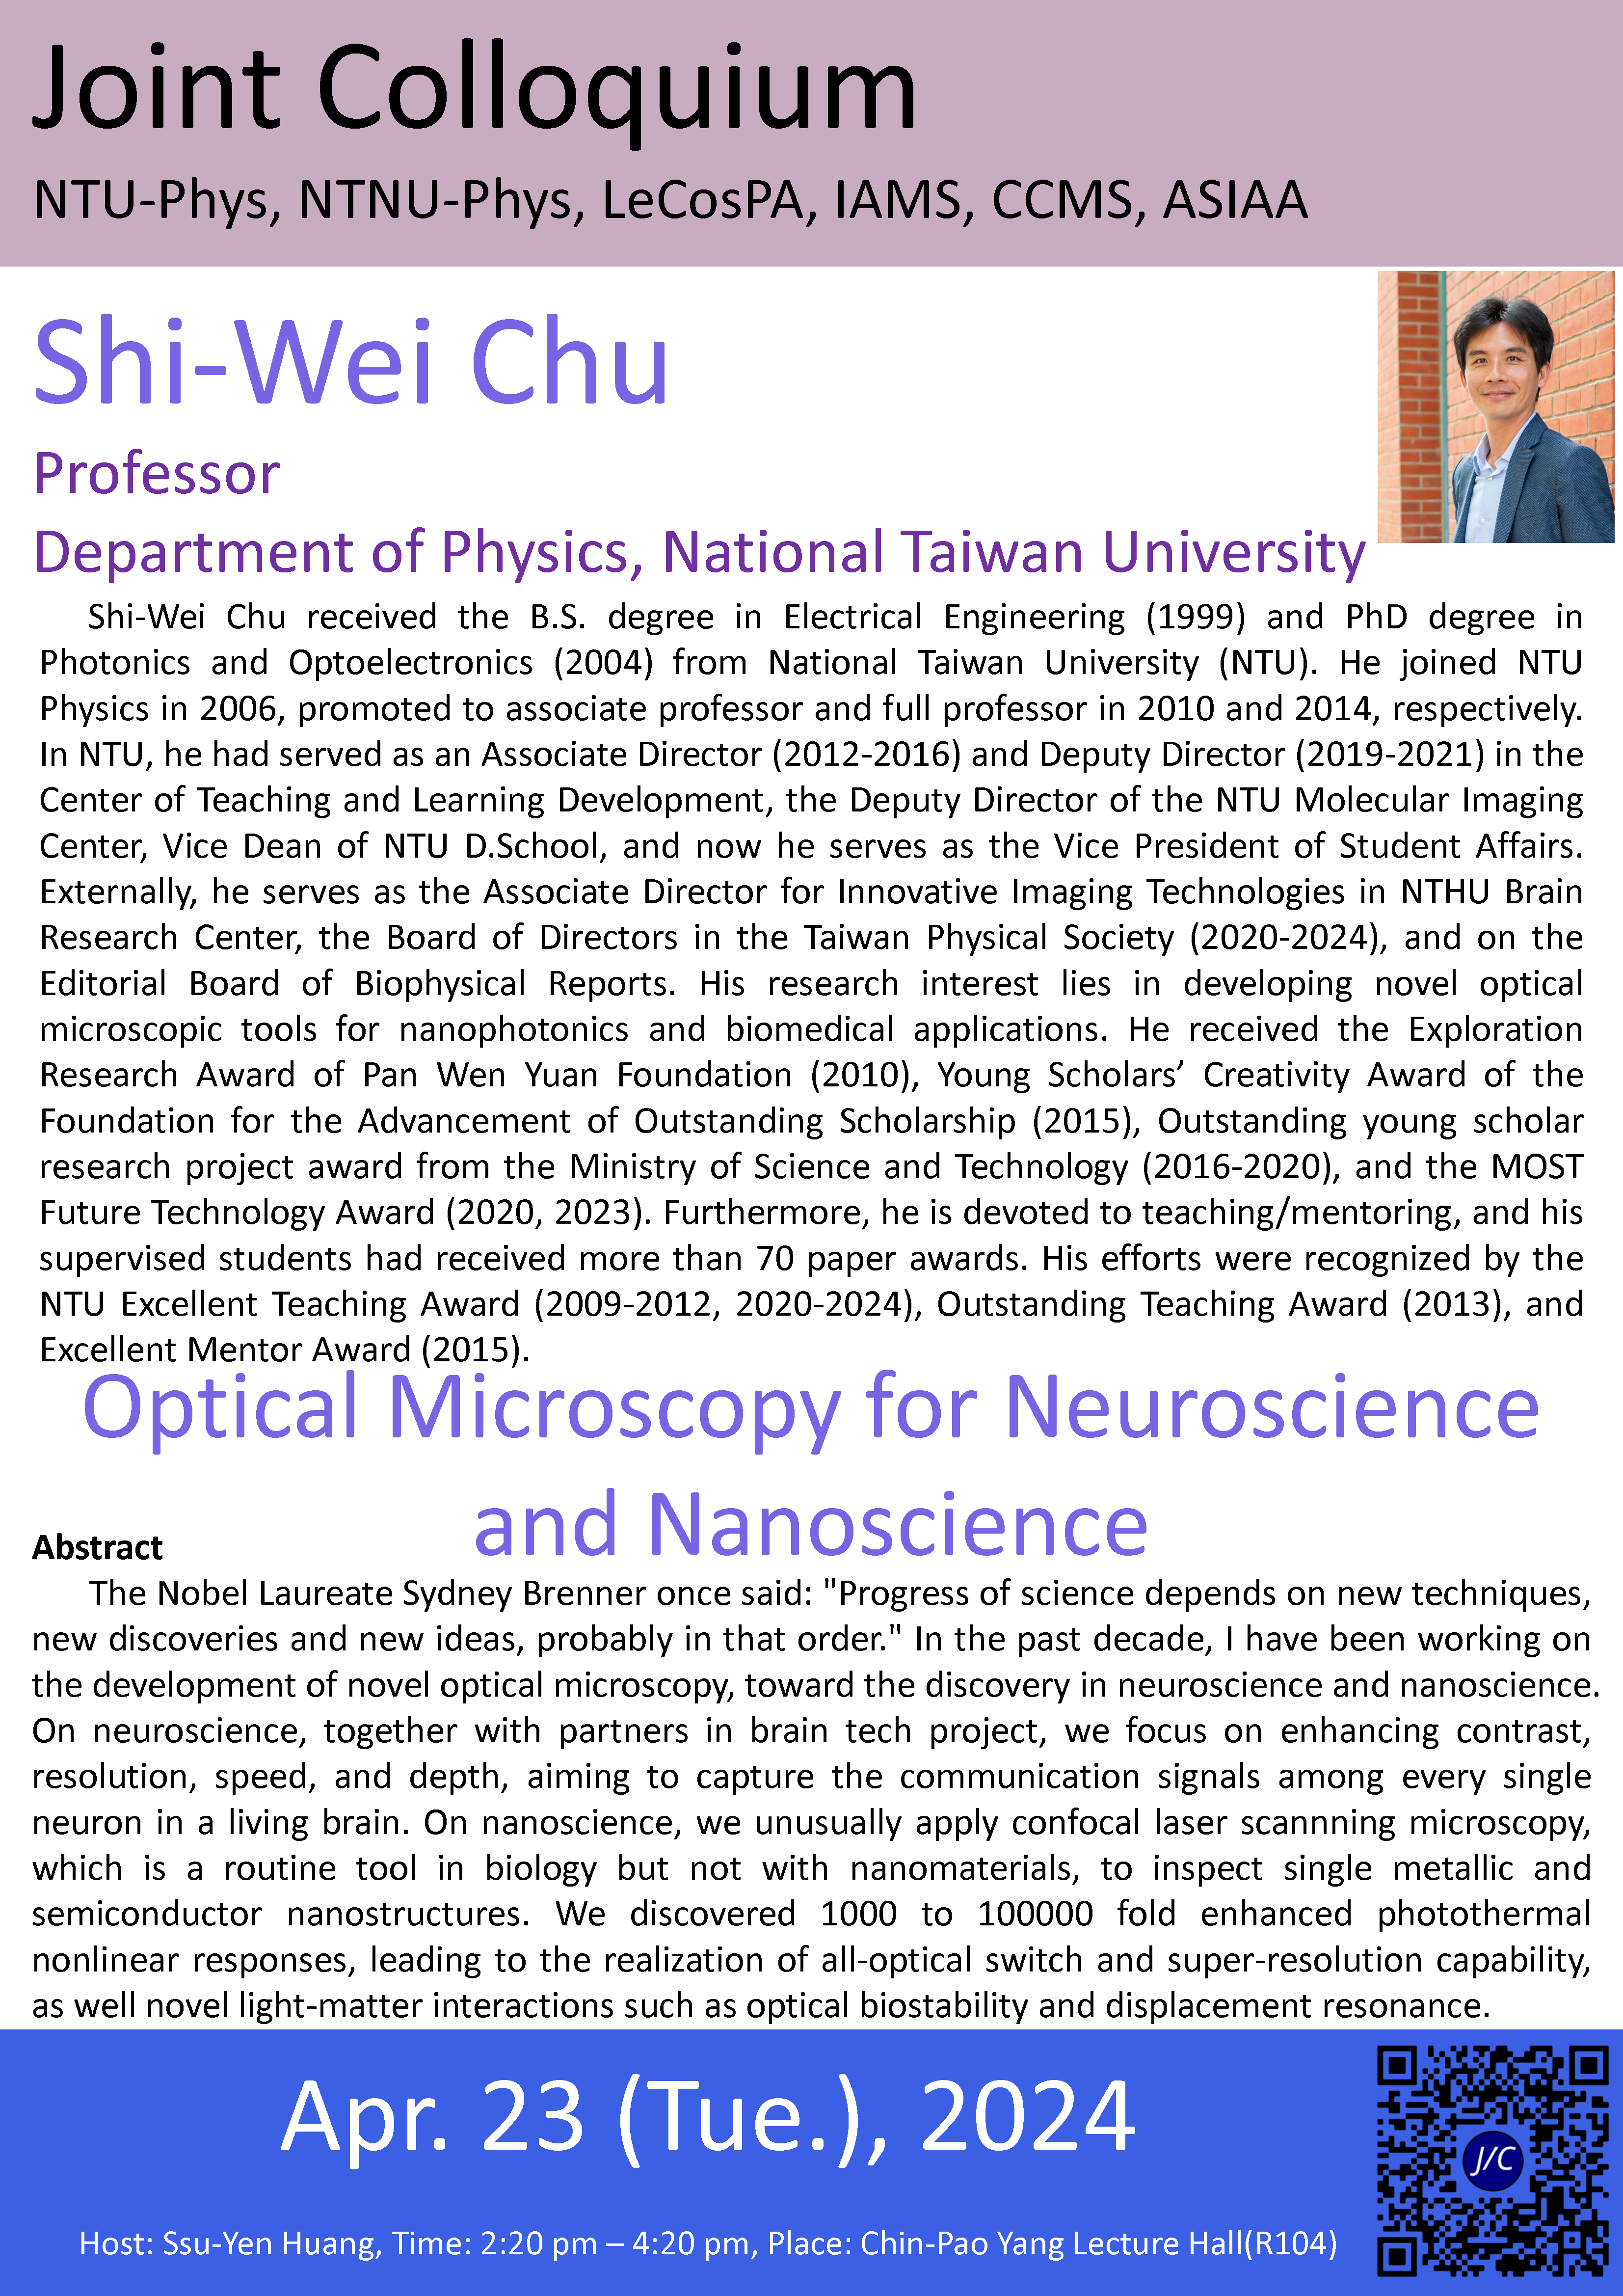 Optical Microscopy for Neuroscience and Nanoscience